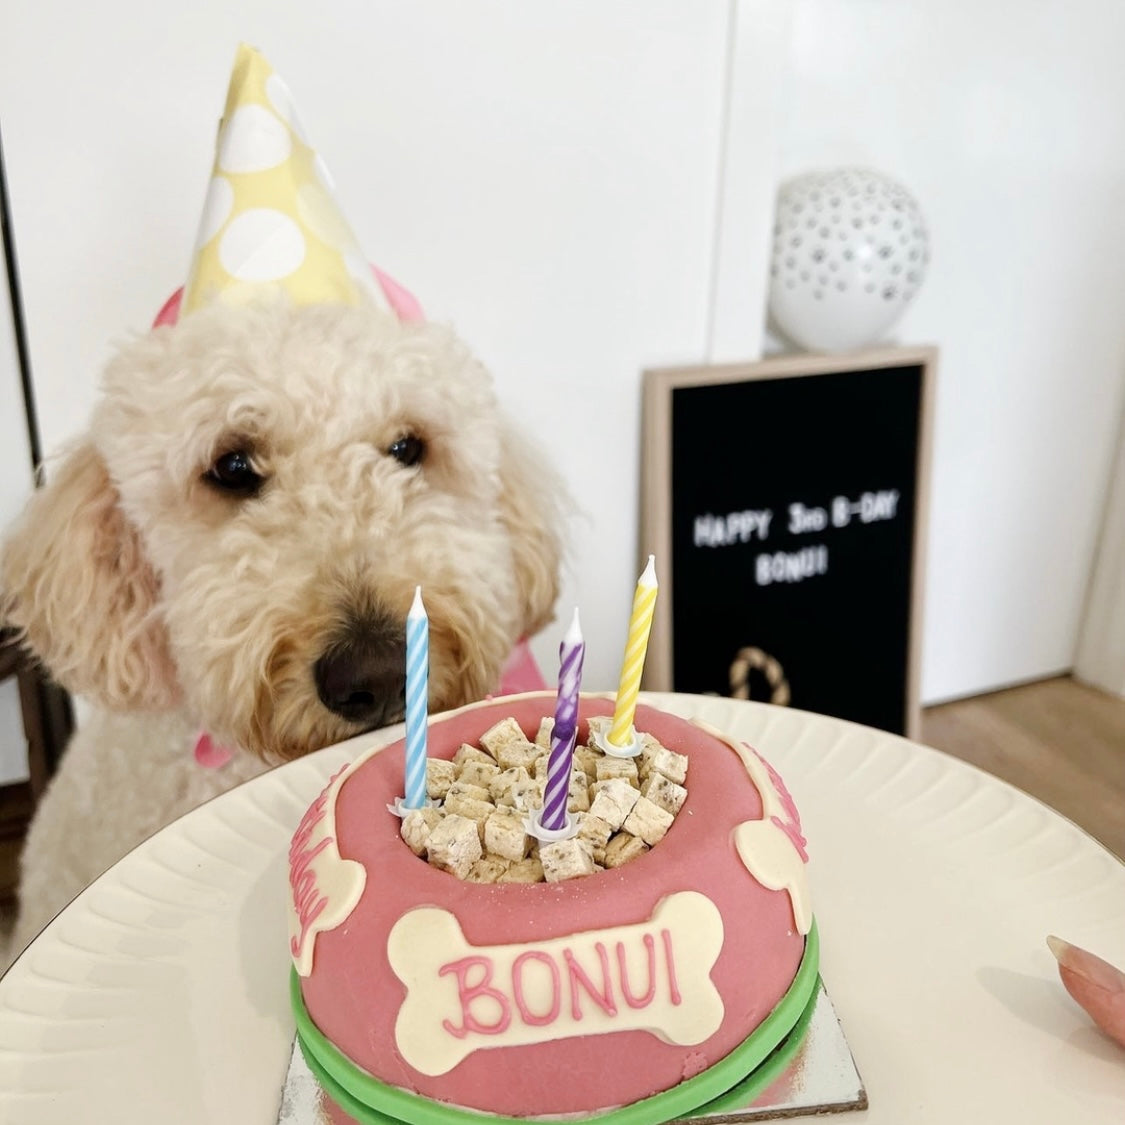 Bonui Posing with Dog Birthday Cake Bowl With Dog Treats Pink